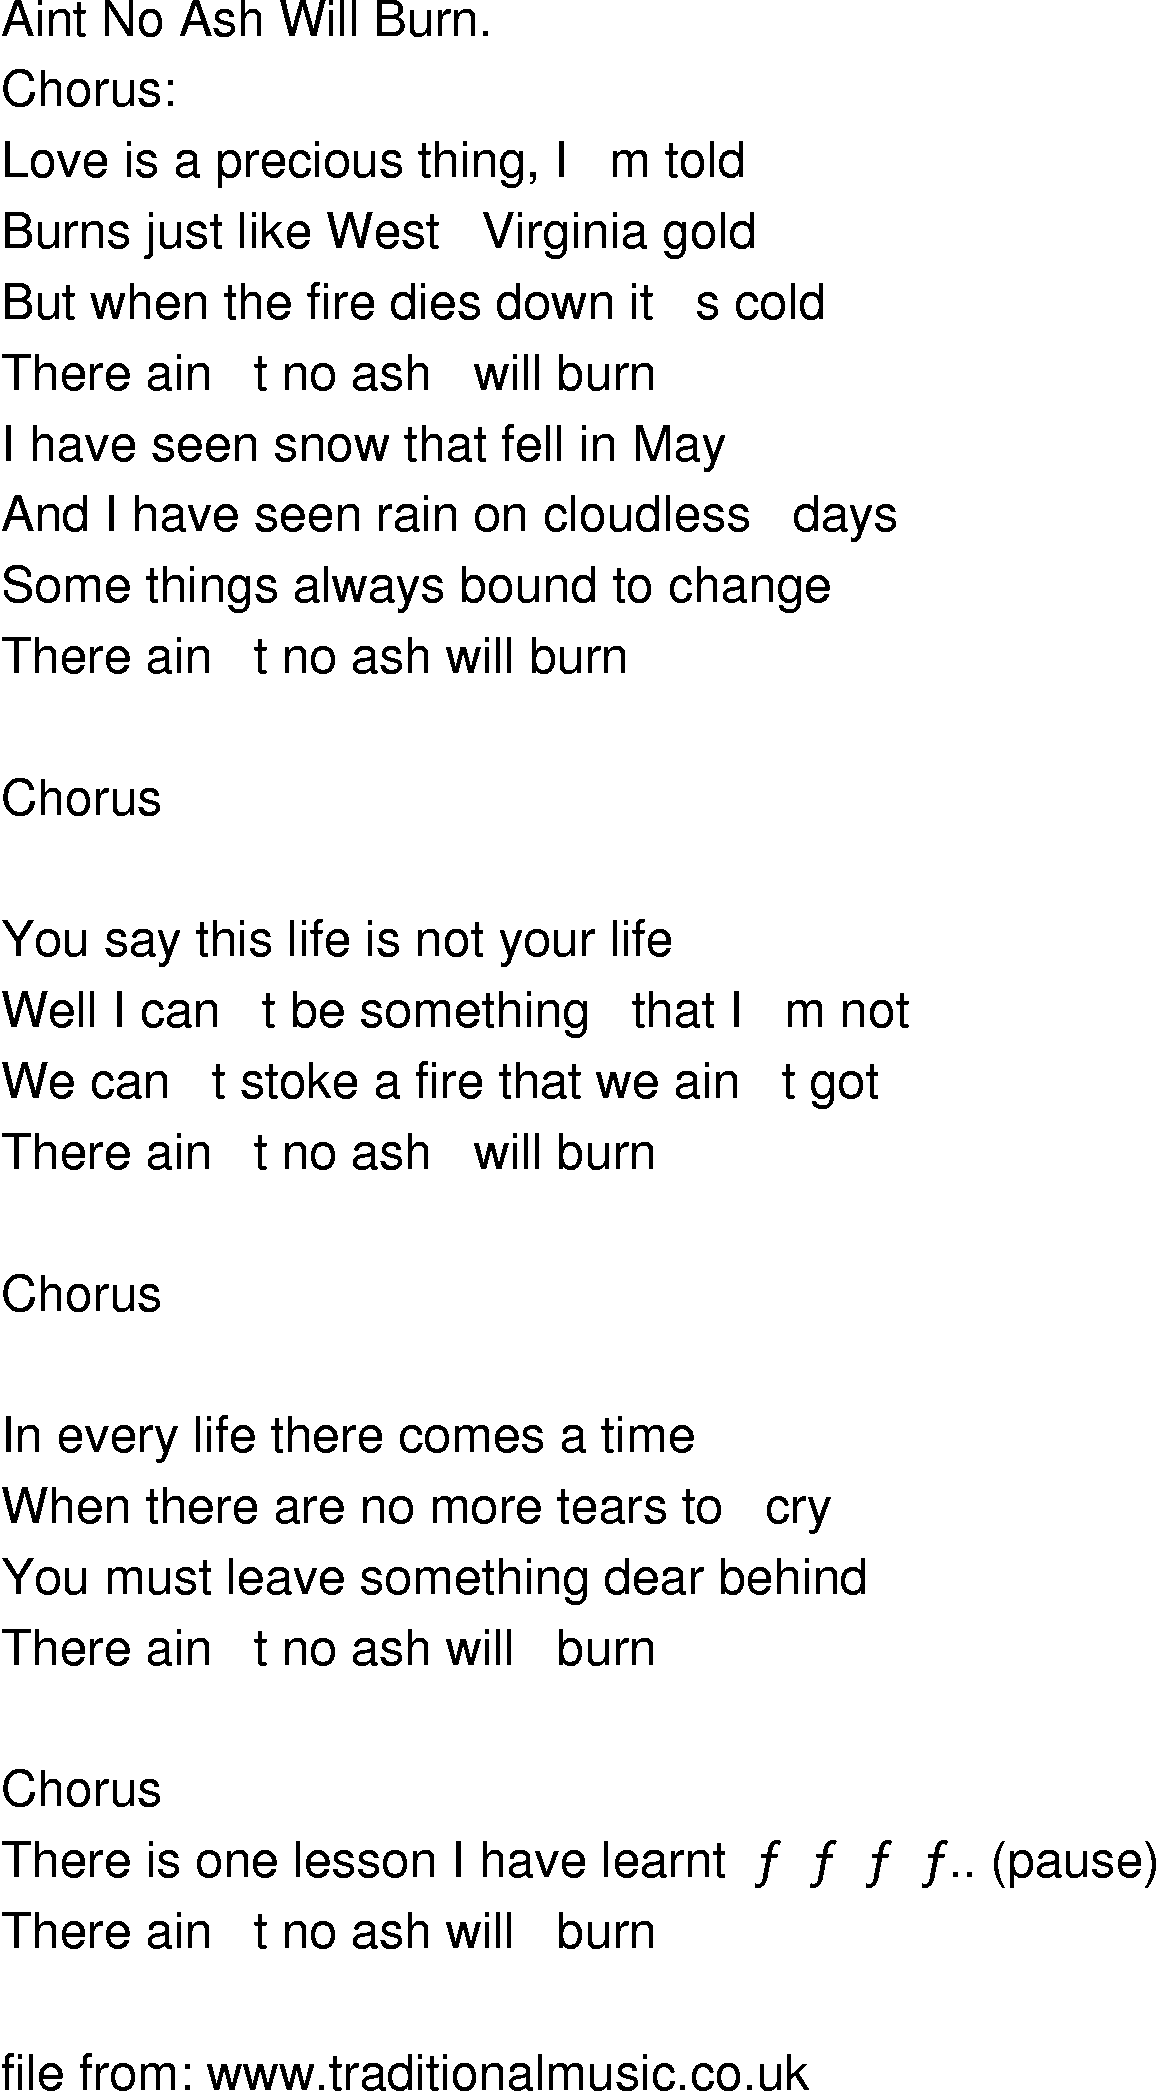 Old-Time (oldtimey) Song Lyrics - aint no ash will burn